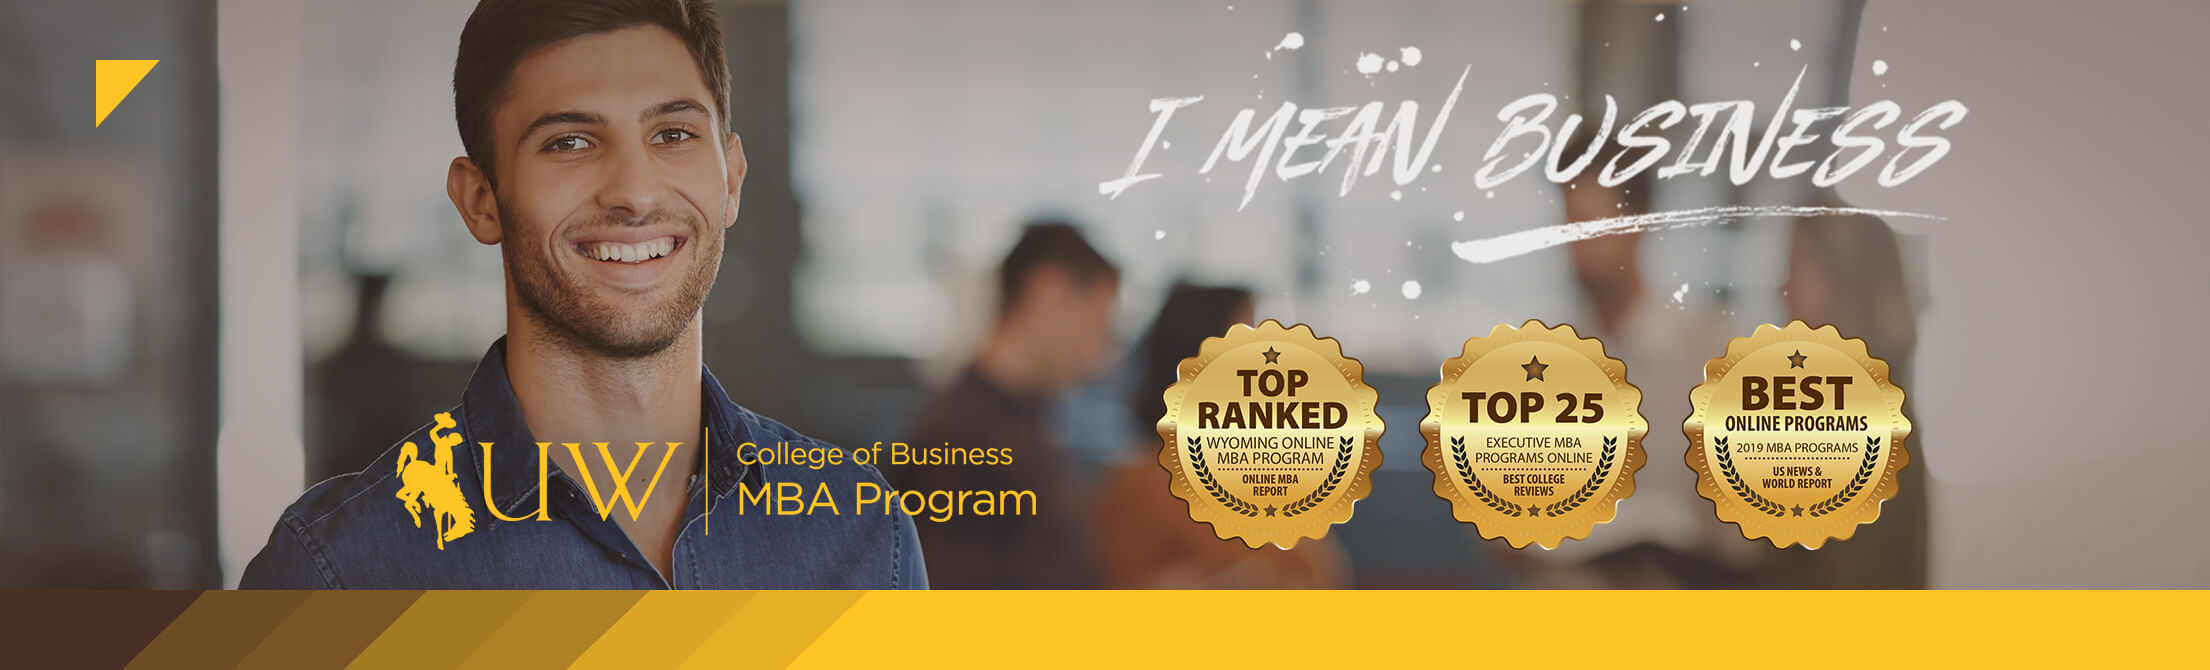 University of Wyoming MBA Program